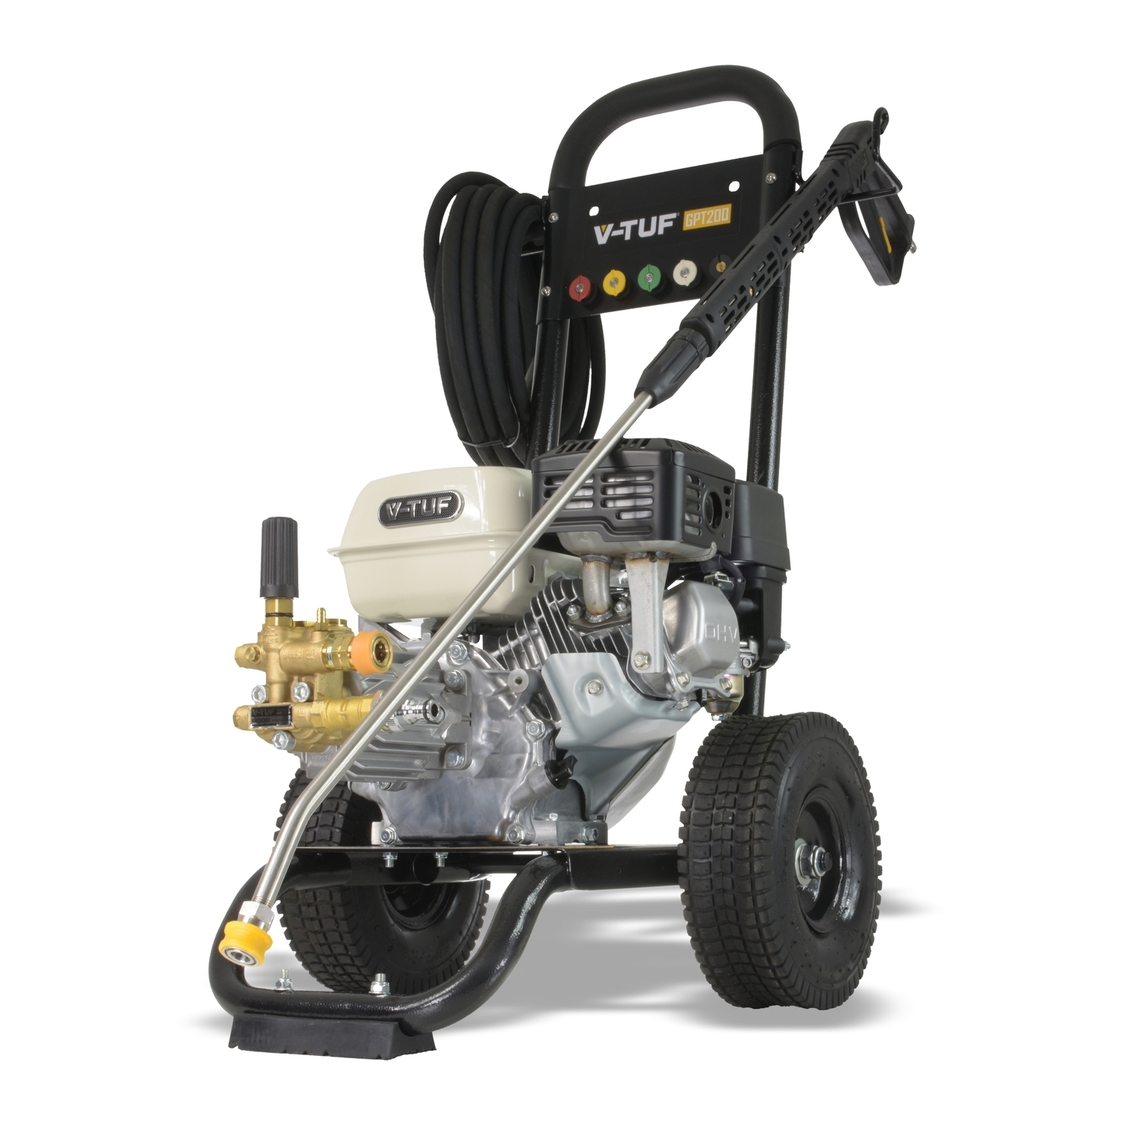 V-Tuf Industrial 6.5HP Petrol Pressure Washer with GP200 Honda Engine - 2755psi, 190Bar, 12L/min PUMP